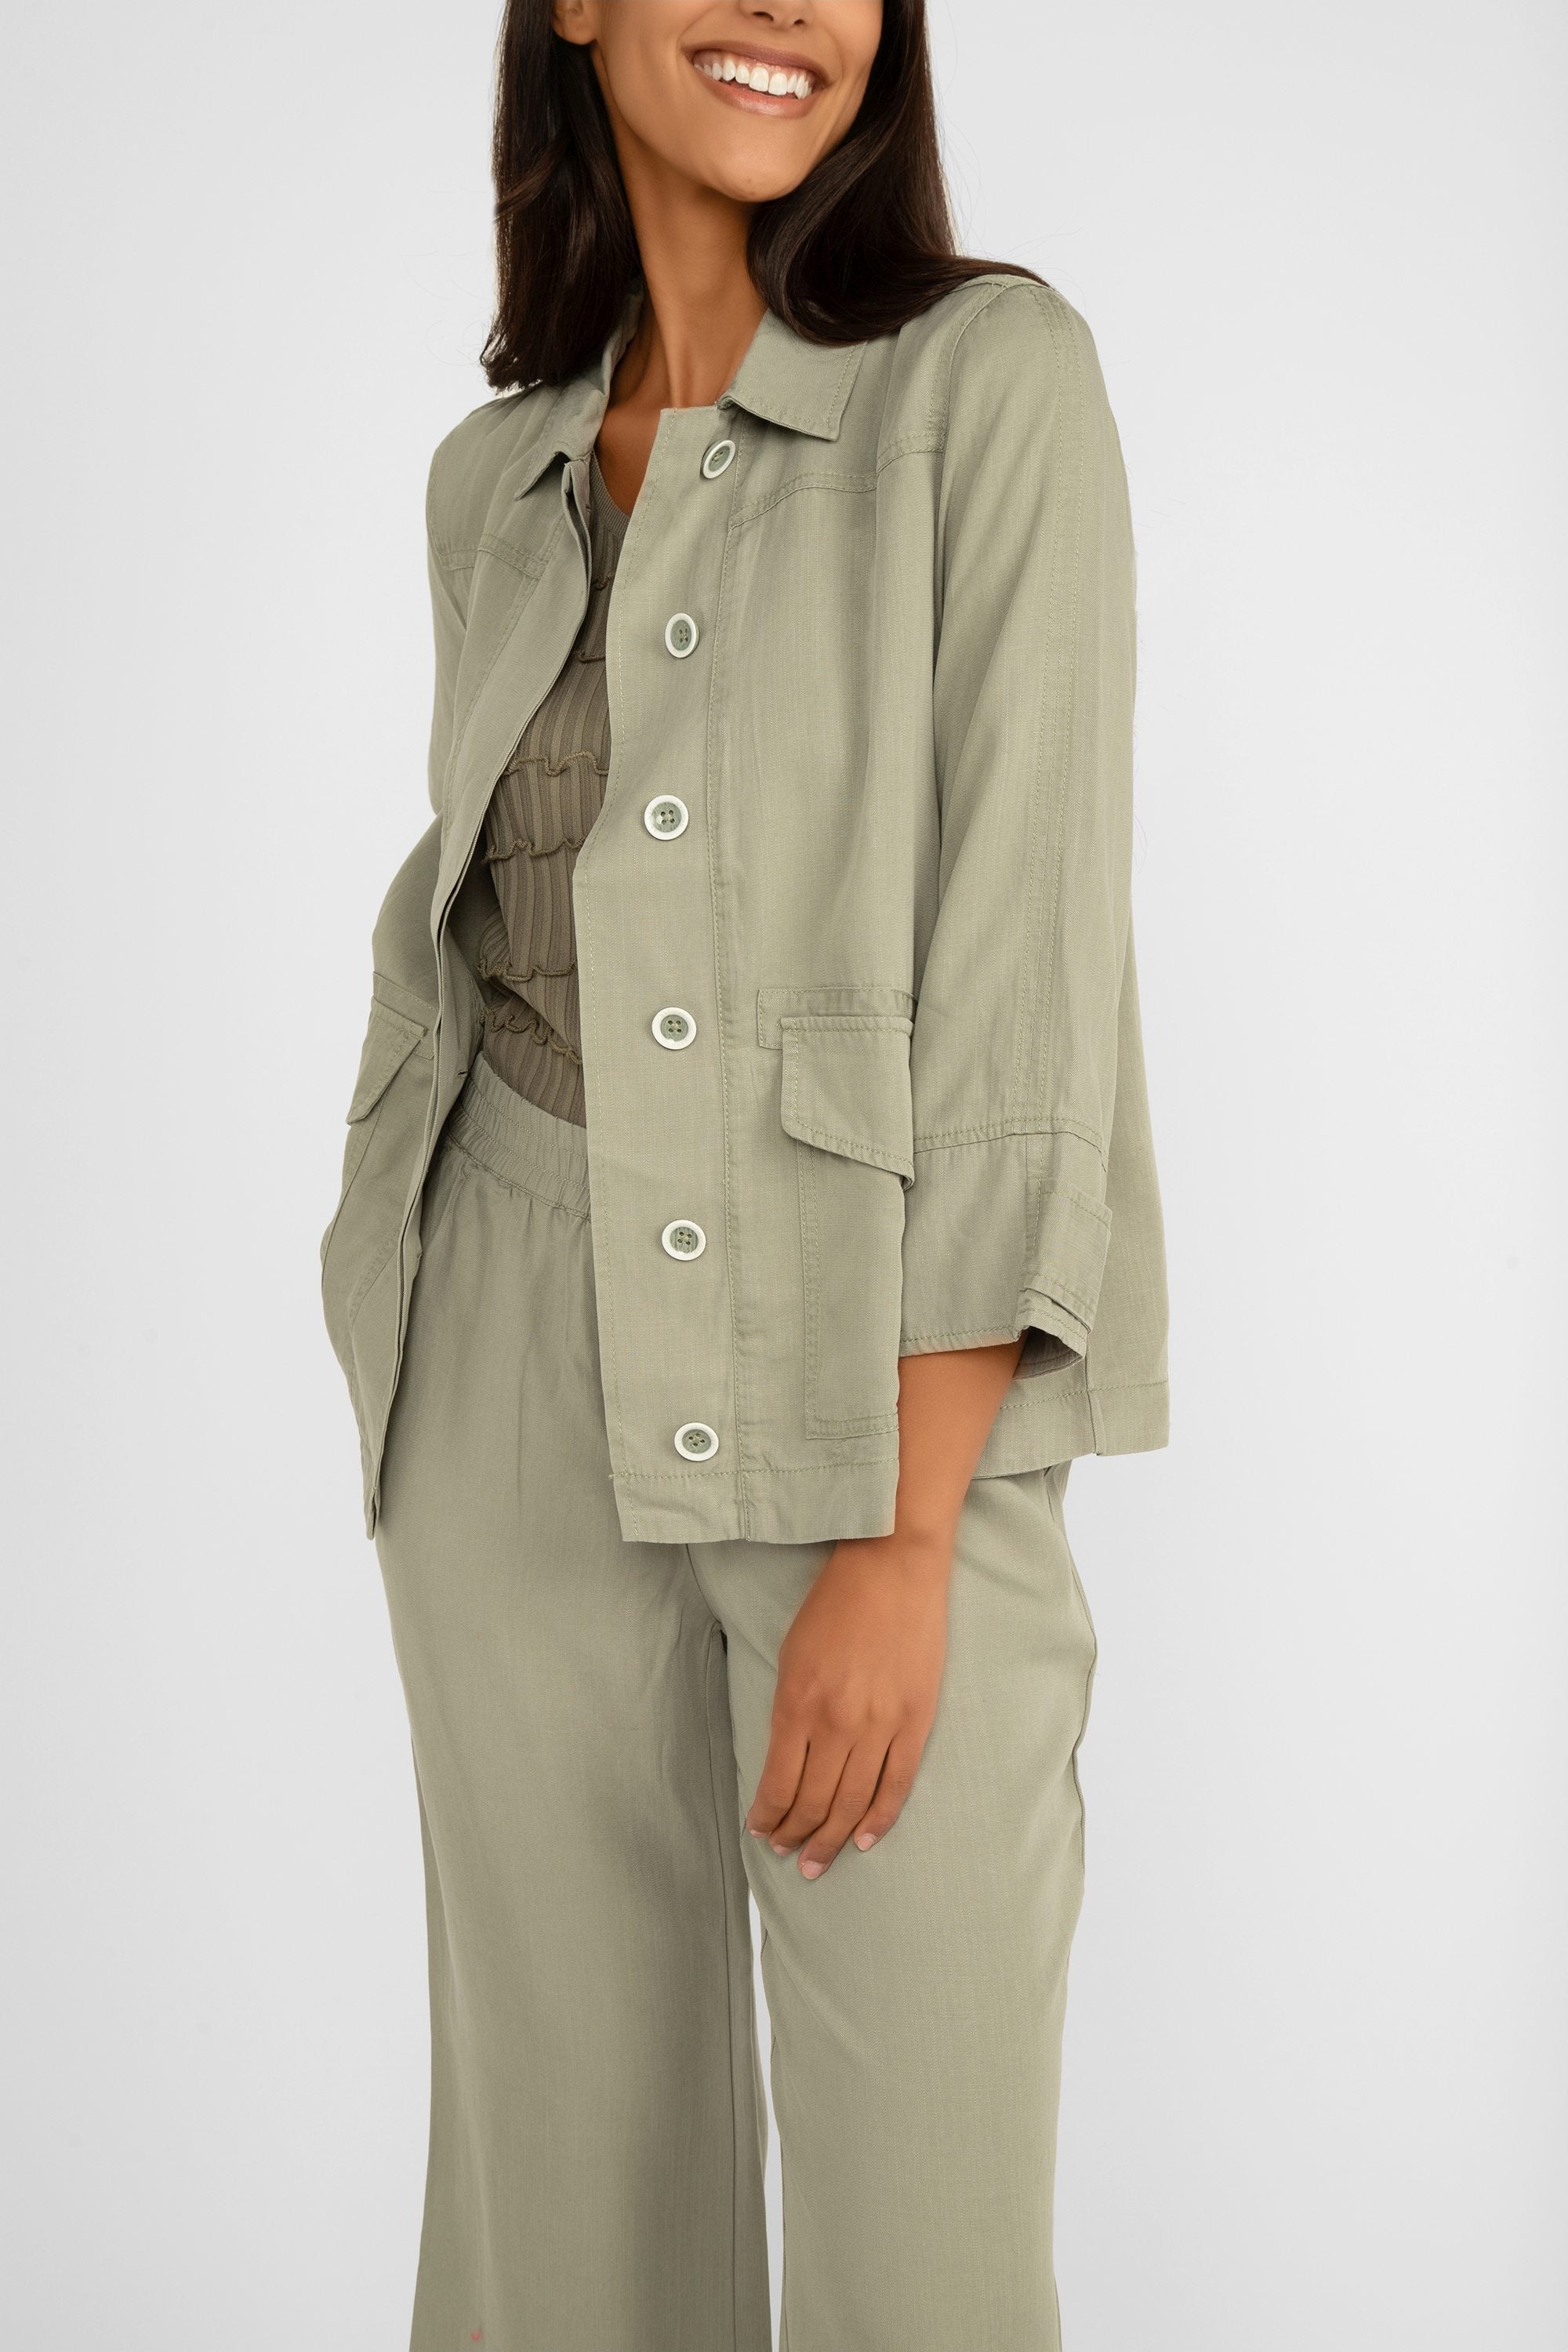 Renuar (R3806-E2142) Women's 3/4 Sleeve Button Front Tencel Jacket with Shirt Collar in Aloe Green